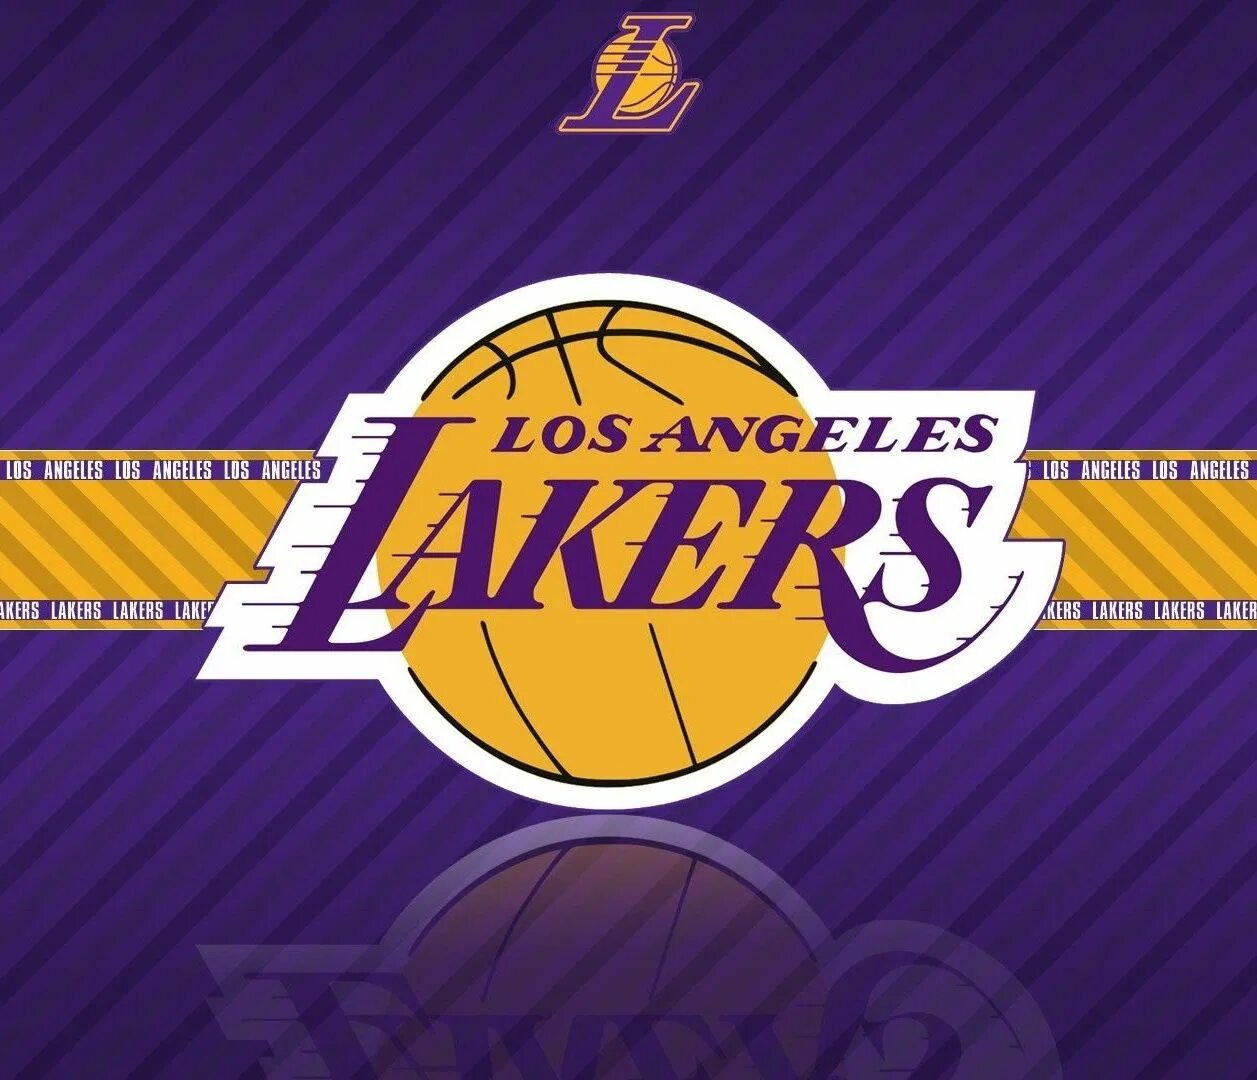 Los angeles 52 текст. Лого Lakers los Angeles Lakers. Эмблема команды Лос-Анджелес Лейкерс. NBA los Angeles Lakers логотип. Lakers обои.